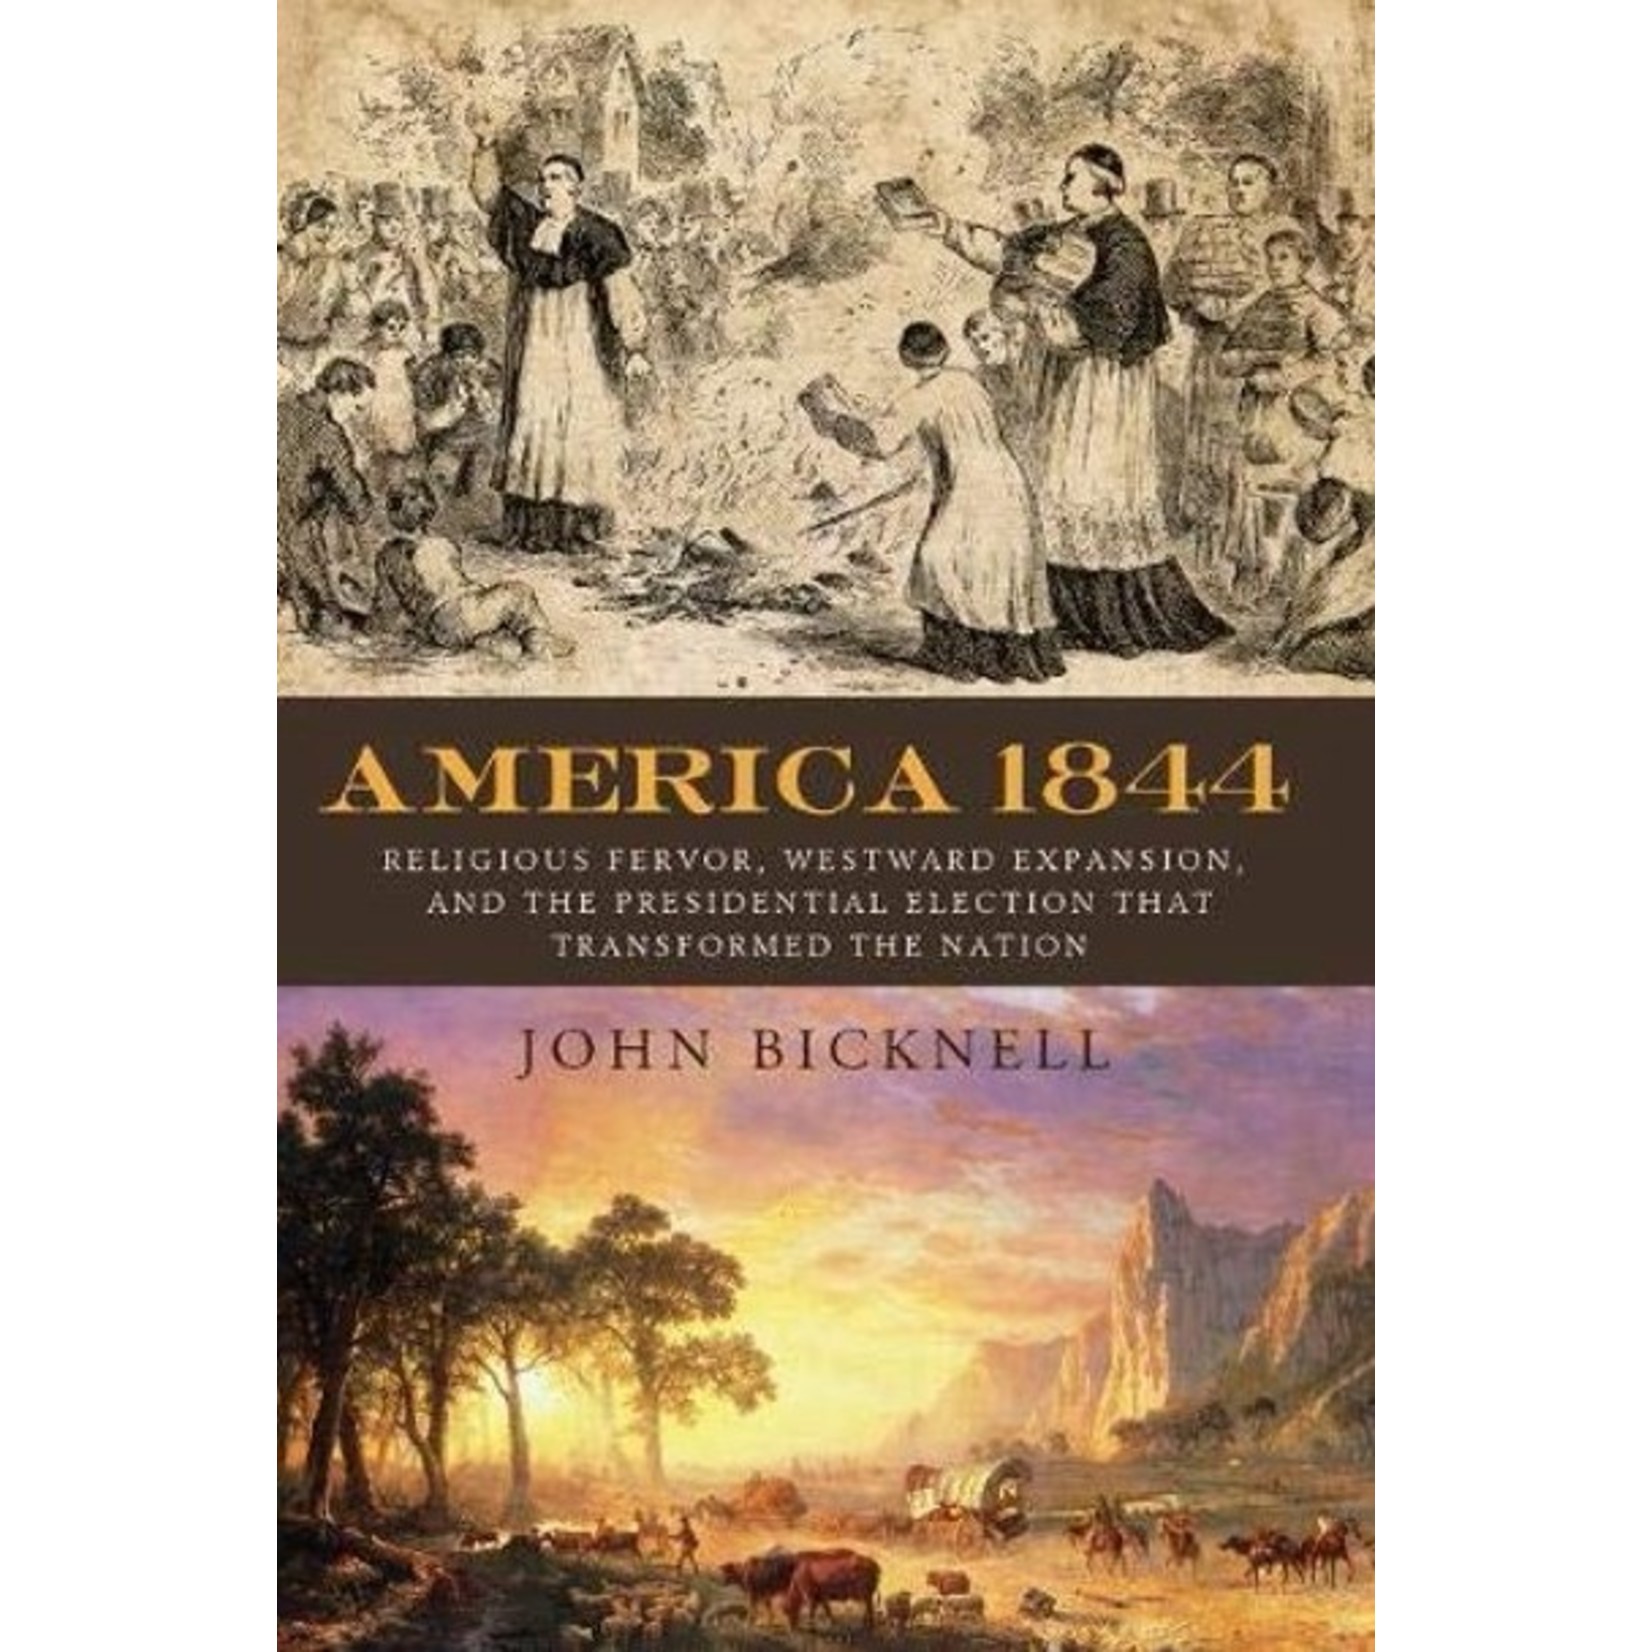 America 1844 by John Bicknell